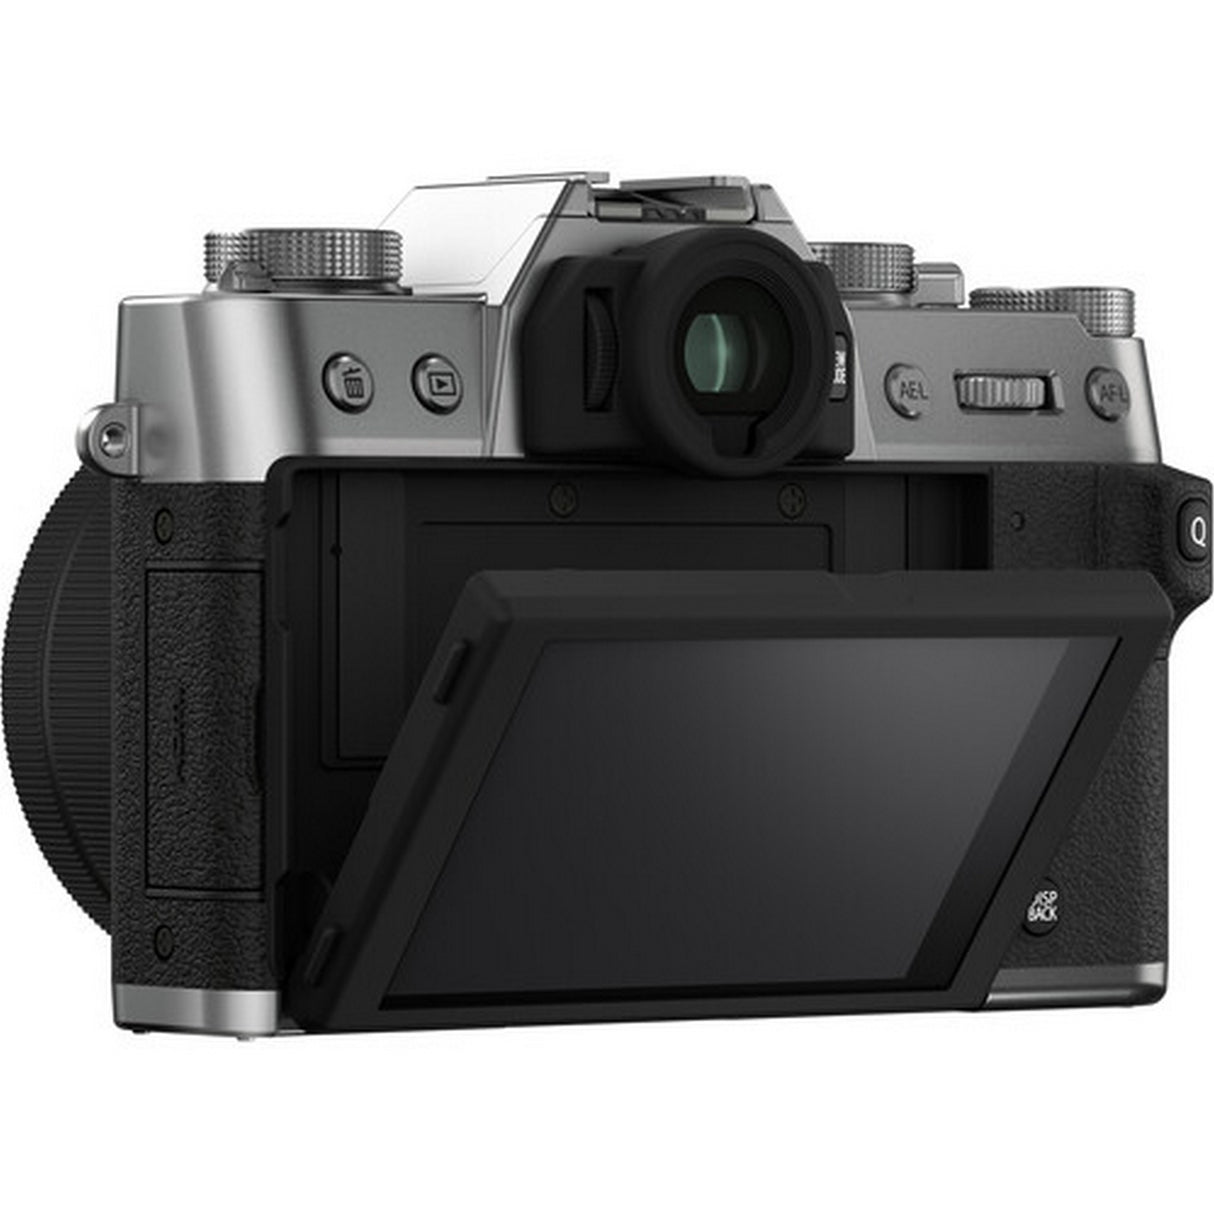 Fujifilm X-T30 II Mirrorless Camera, No Lens, Silver